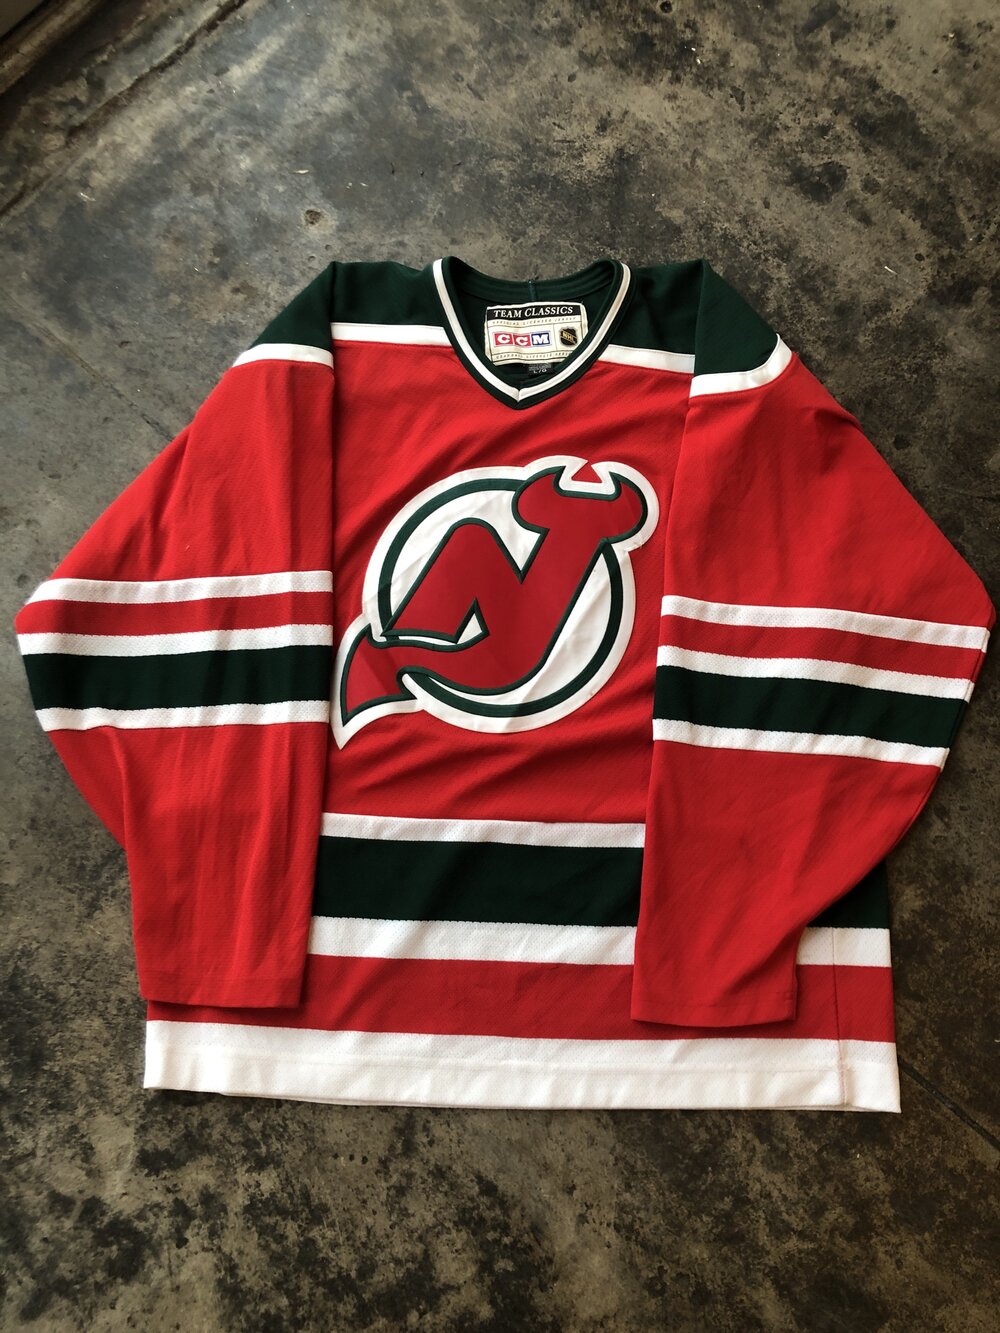 Vintage CCM NHL New Jersey Devils White Logo Red Hockey Jersey